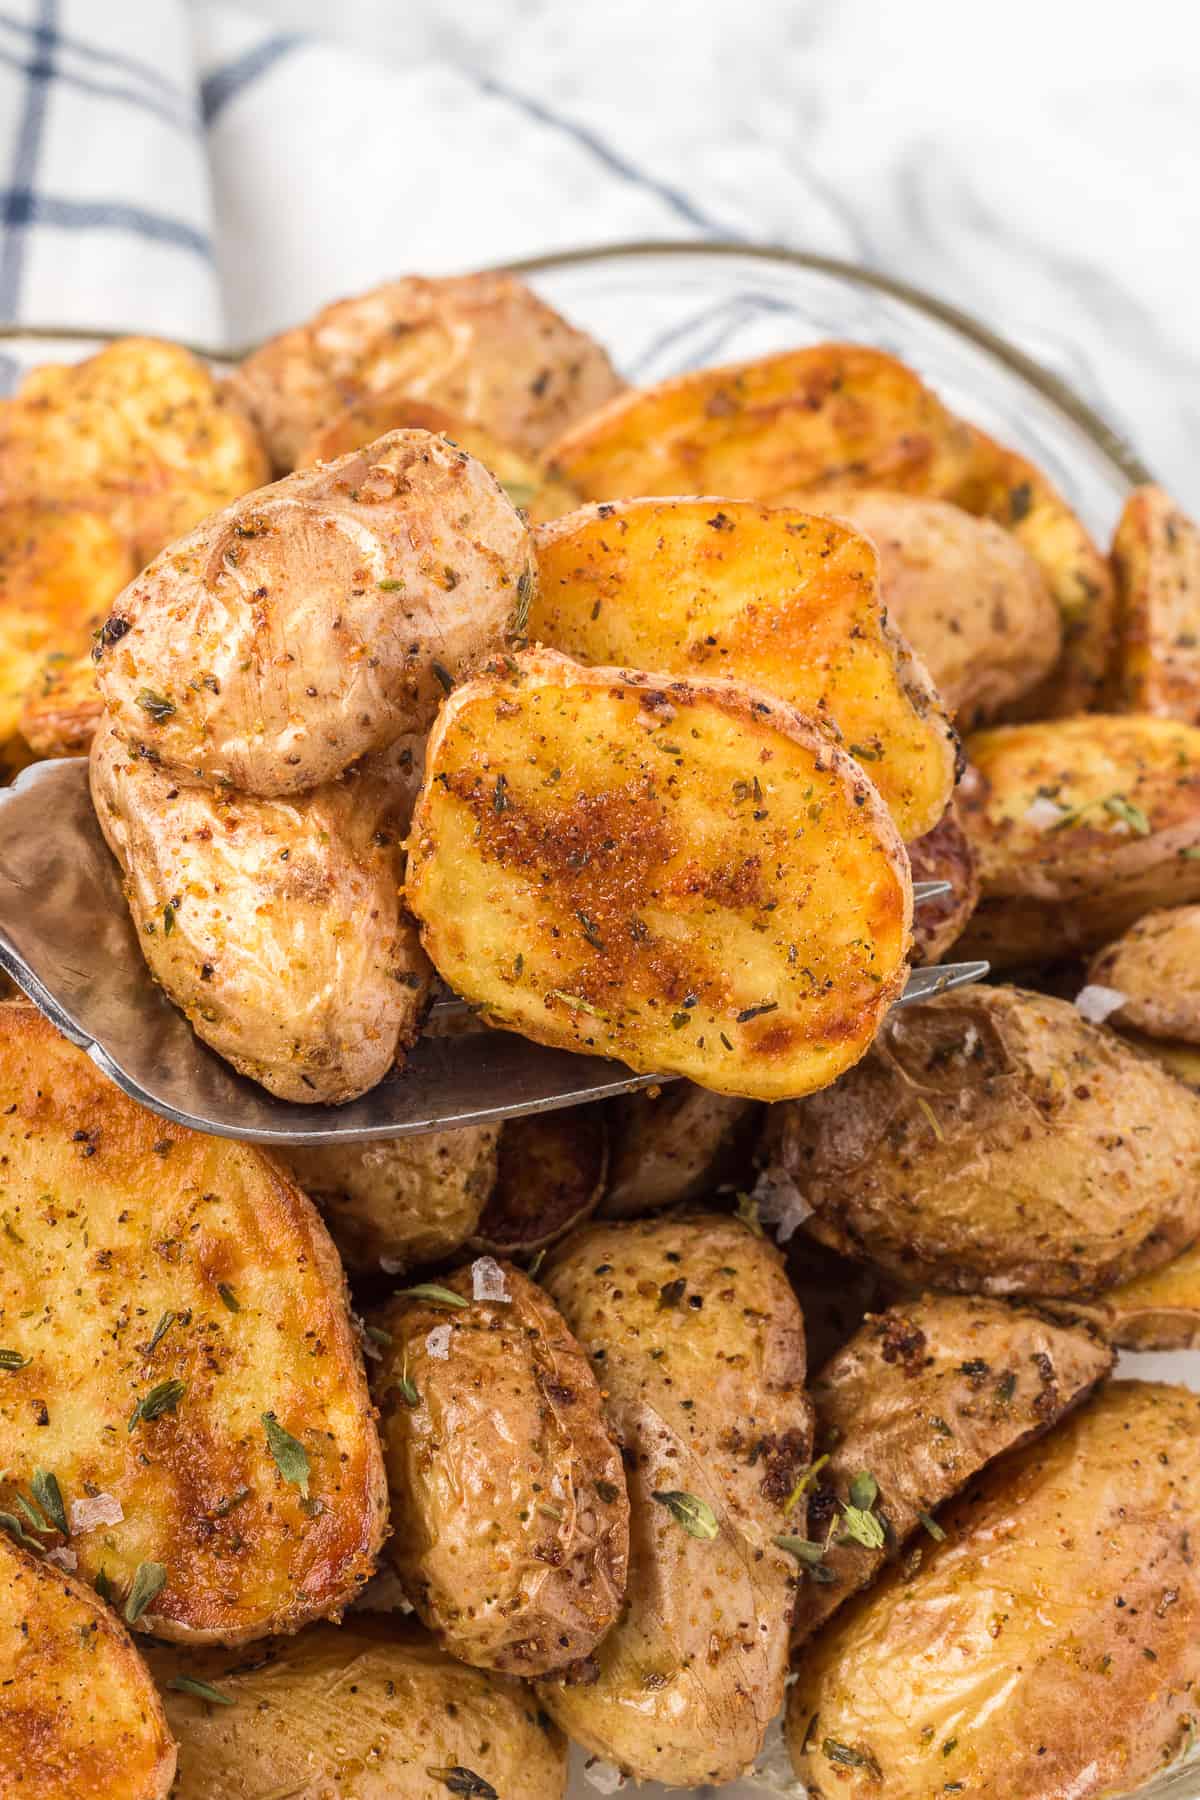 Air fryer potatoes - a super easy side dish.